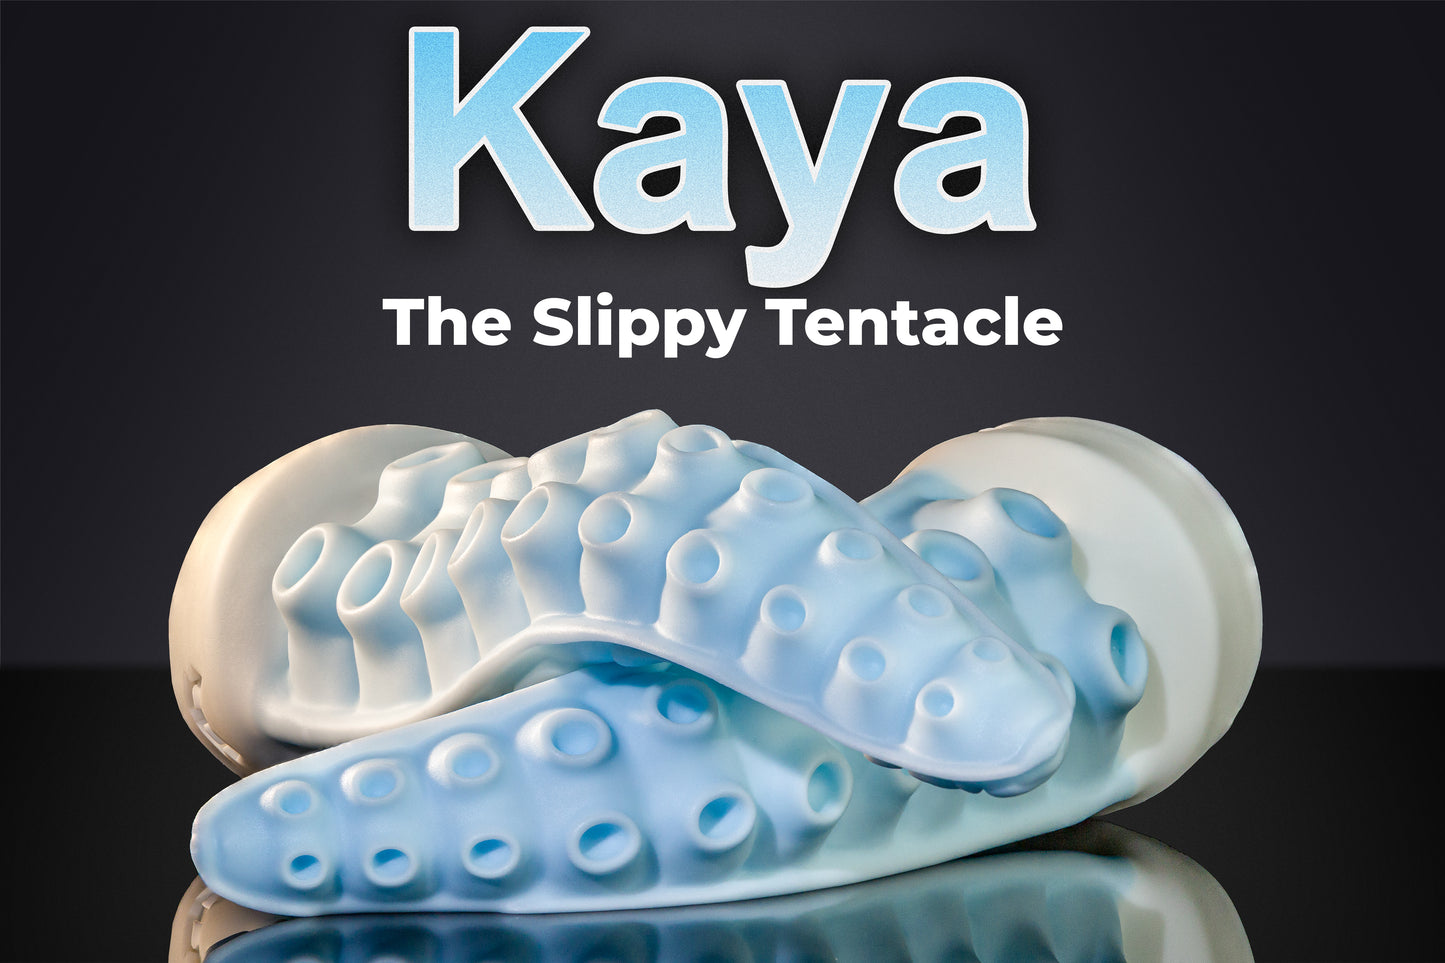 kaya the slippy tentacle product image with product name